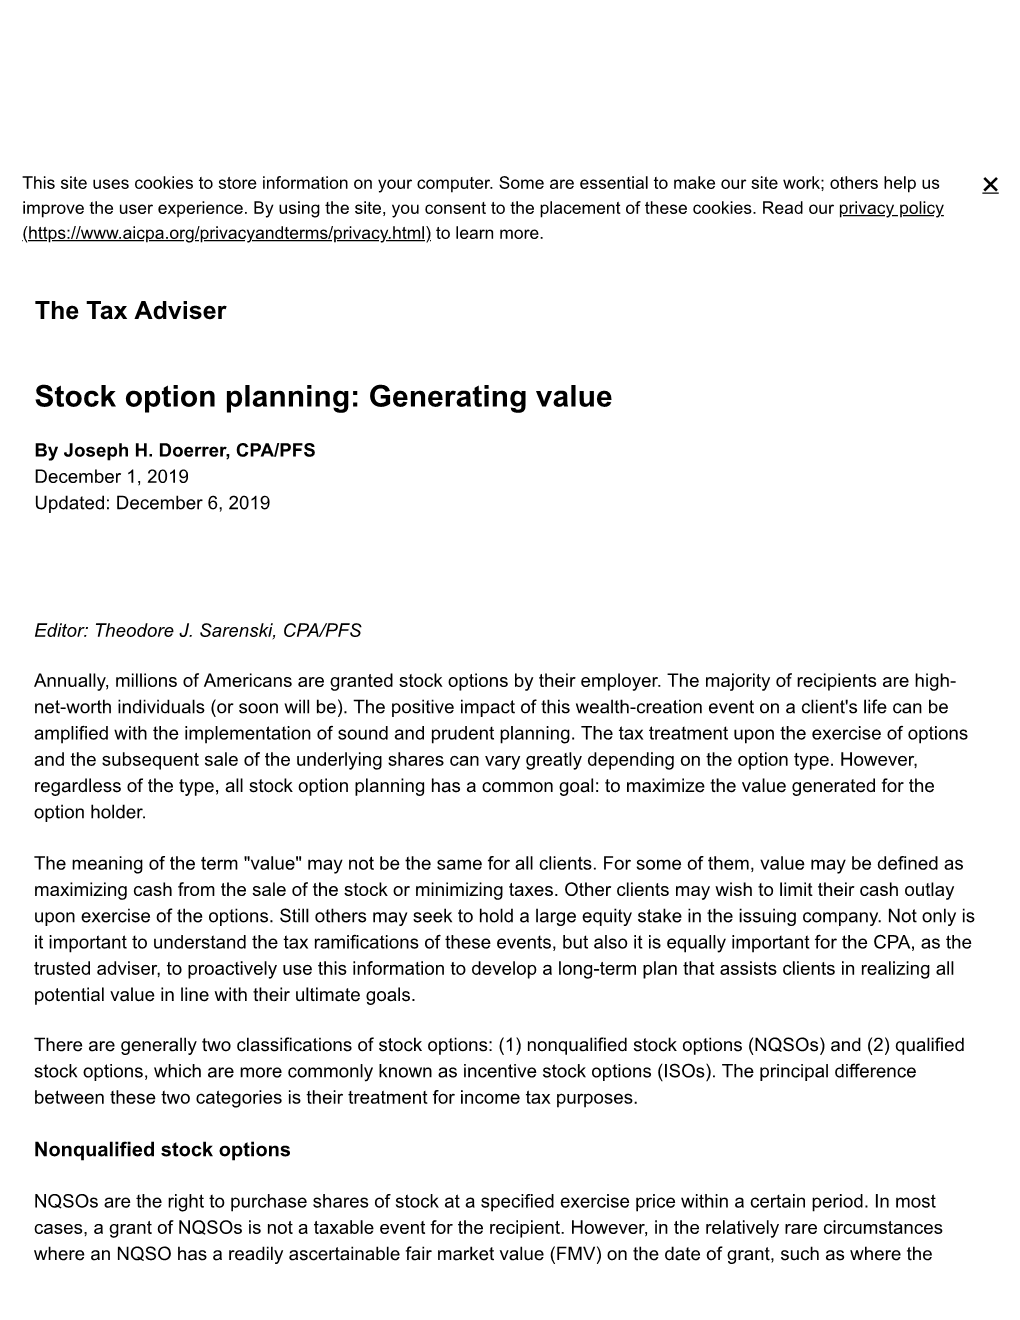 Stock Option Planning: Generating Value